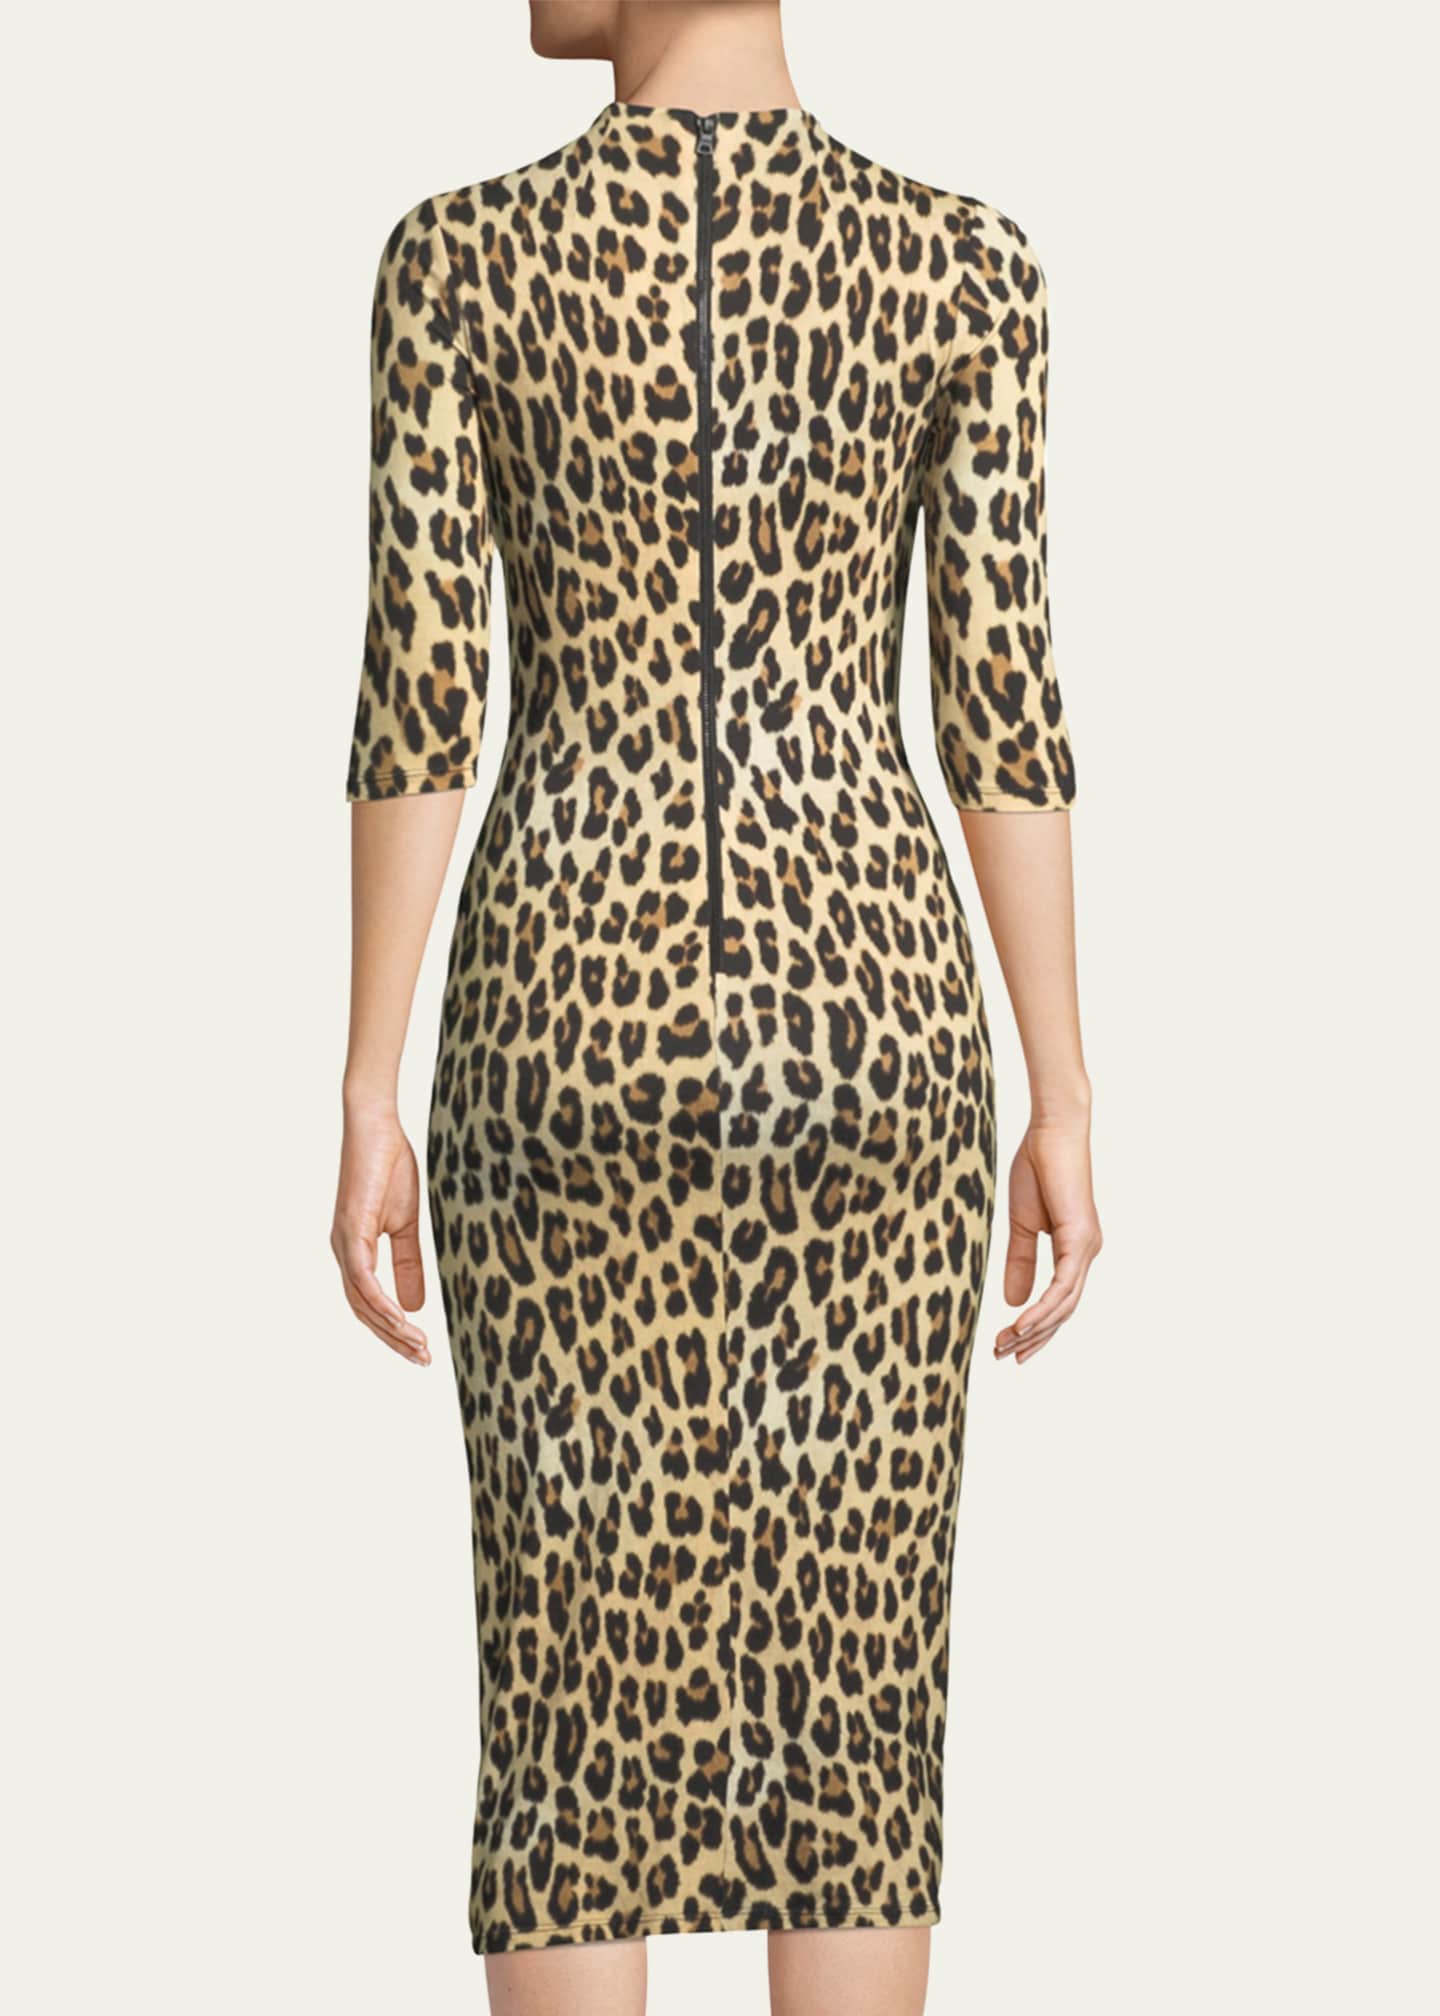 Alice + Olivia Delora Fitted Leopard Mock-Neck Dress - Bergdorf Goodman